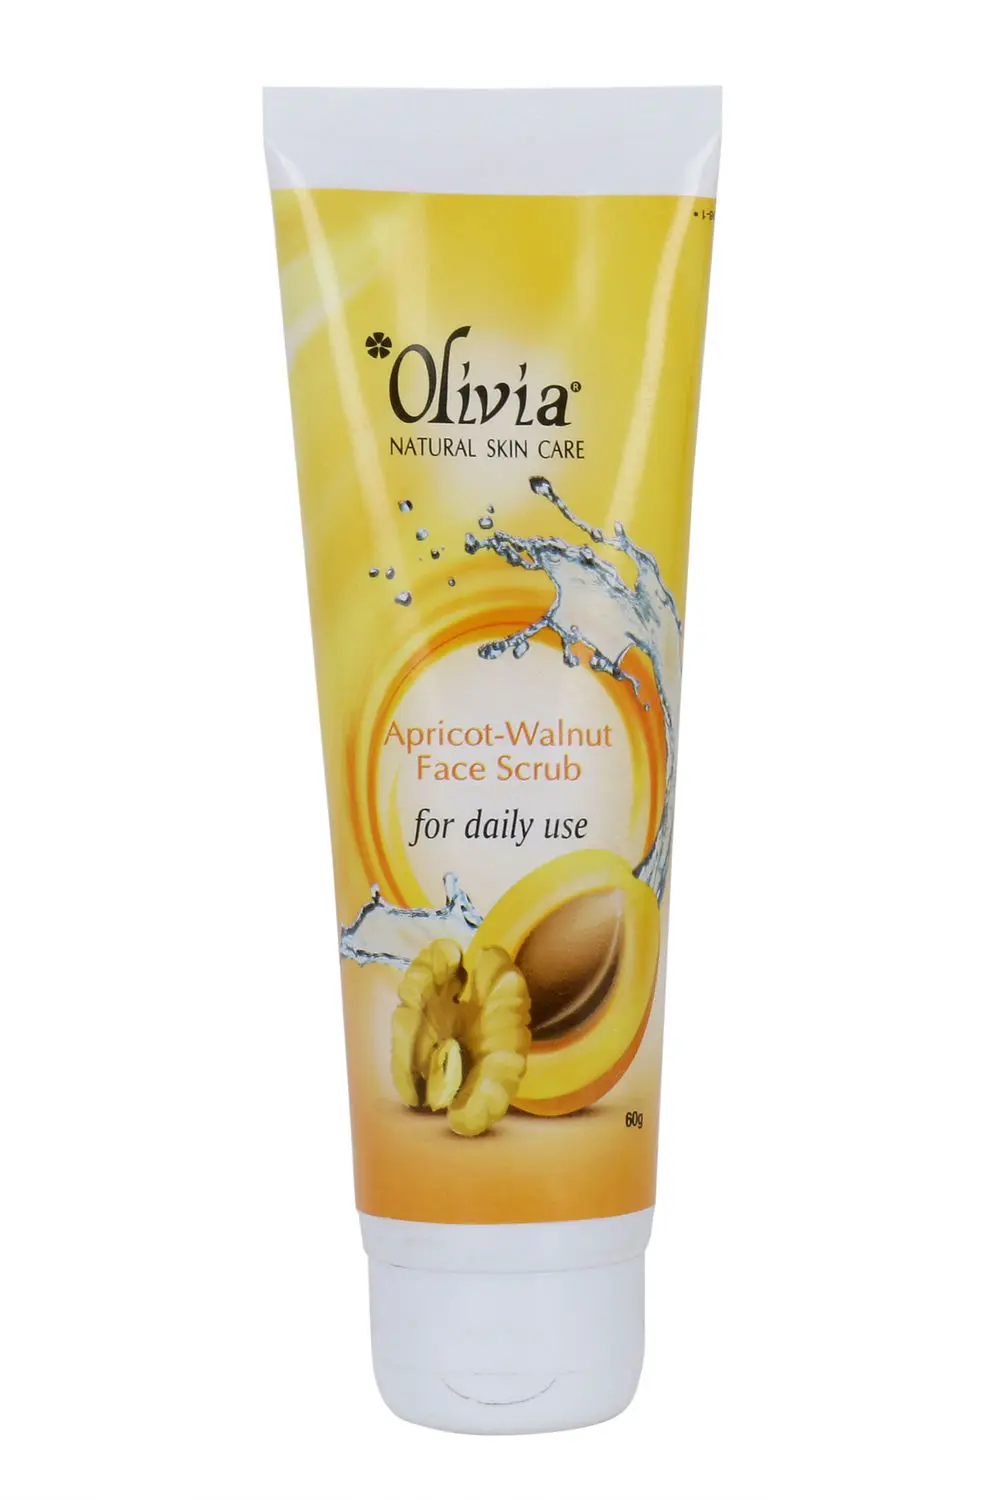 Olivia Aprocot-Walnut Face Scrub (60 g)